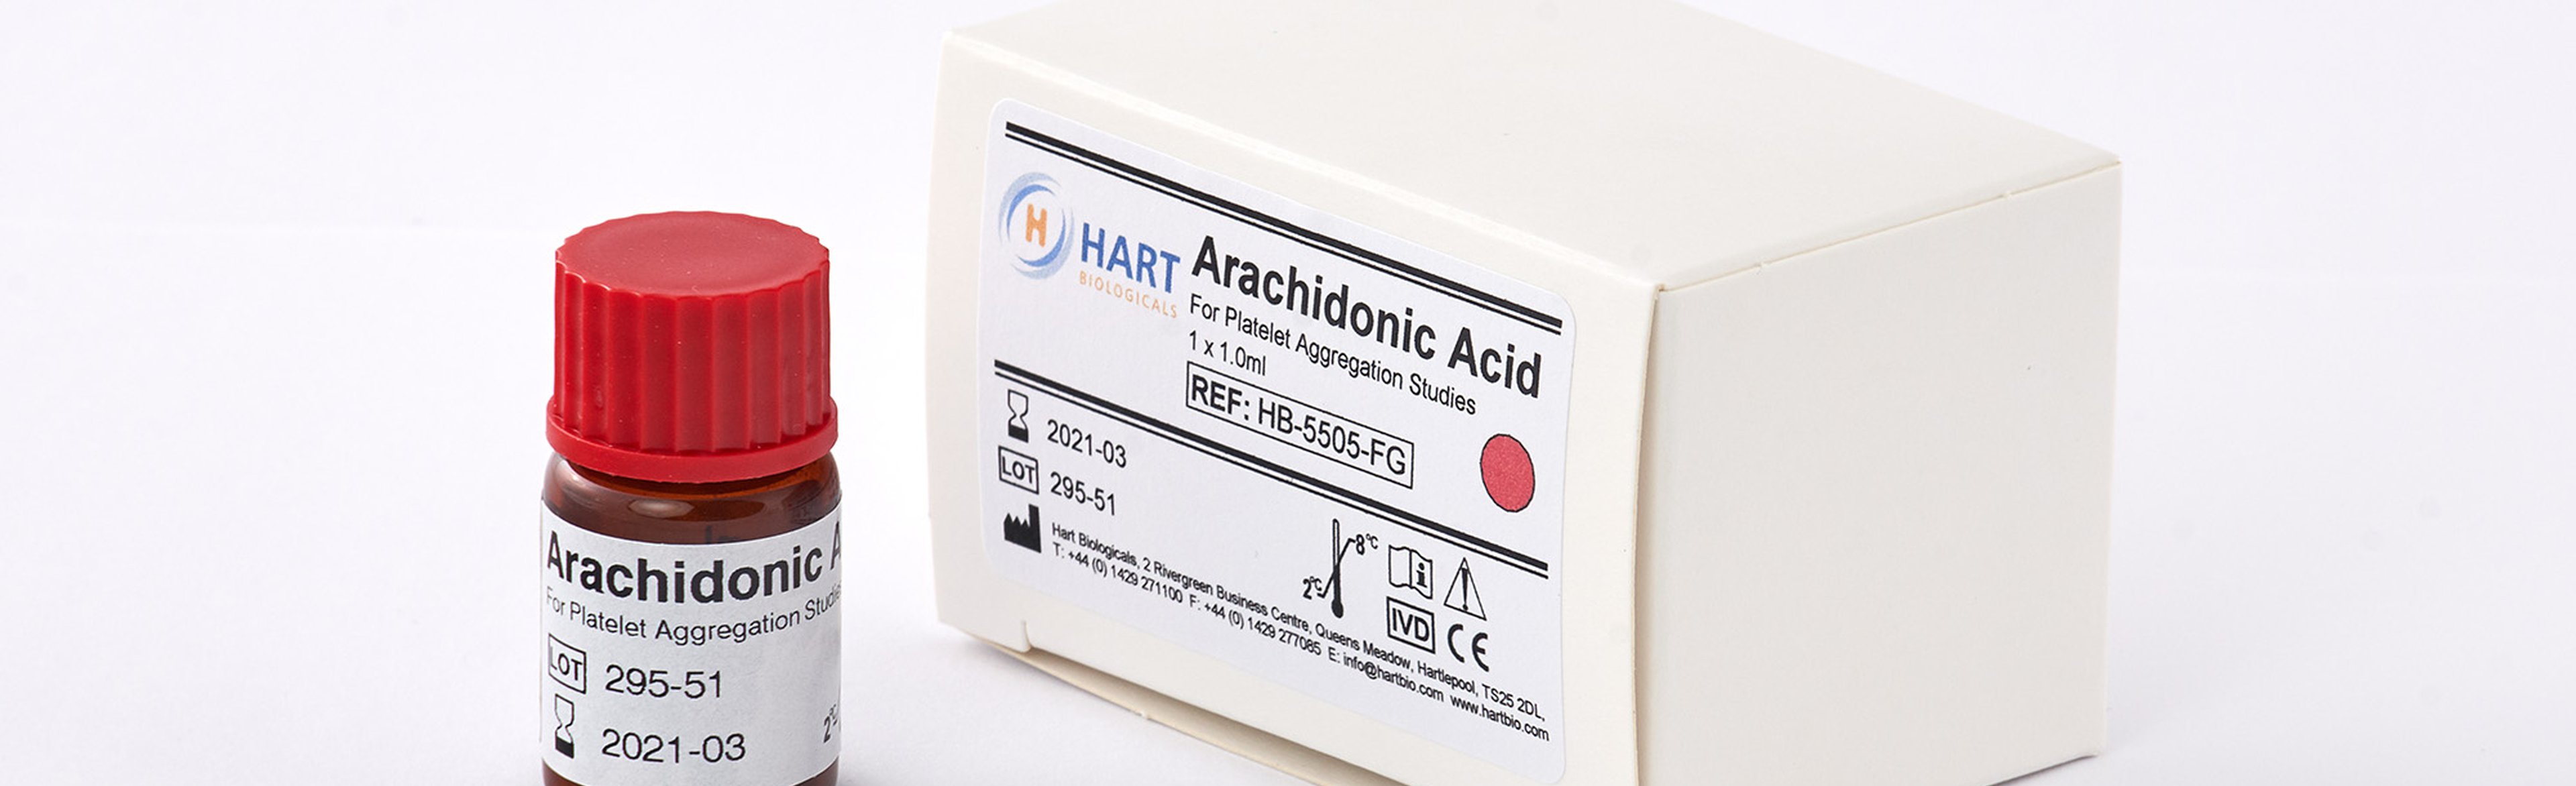 Hart Biologicals adds Arachidonic Acid to its MEA line Image